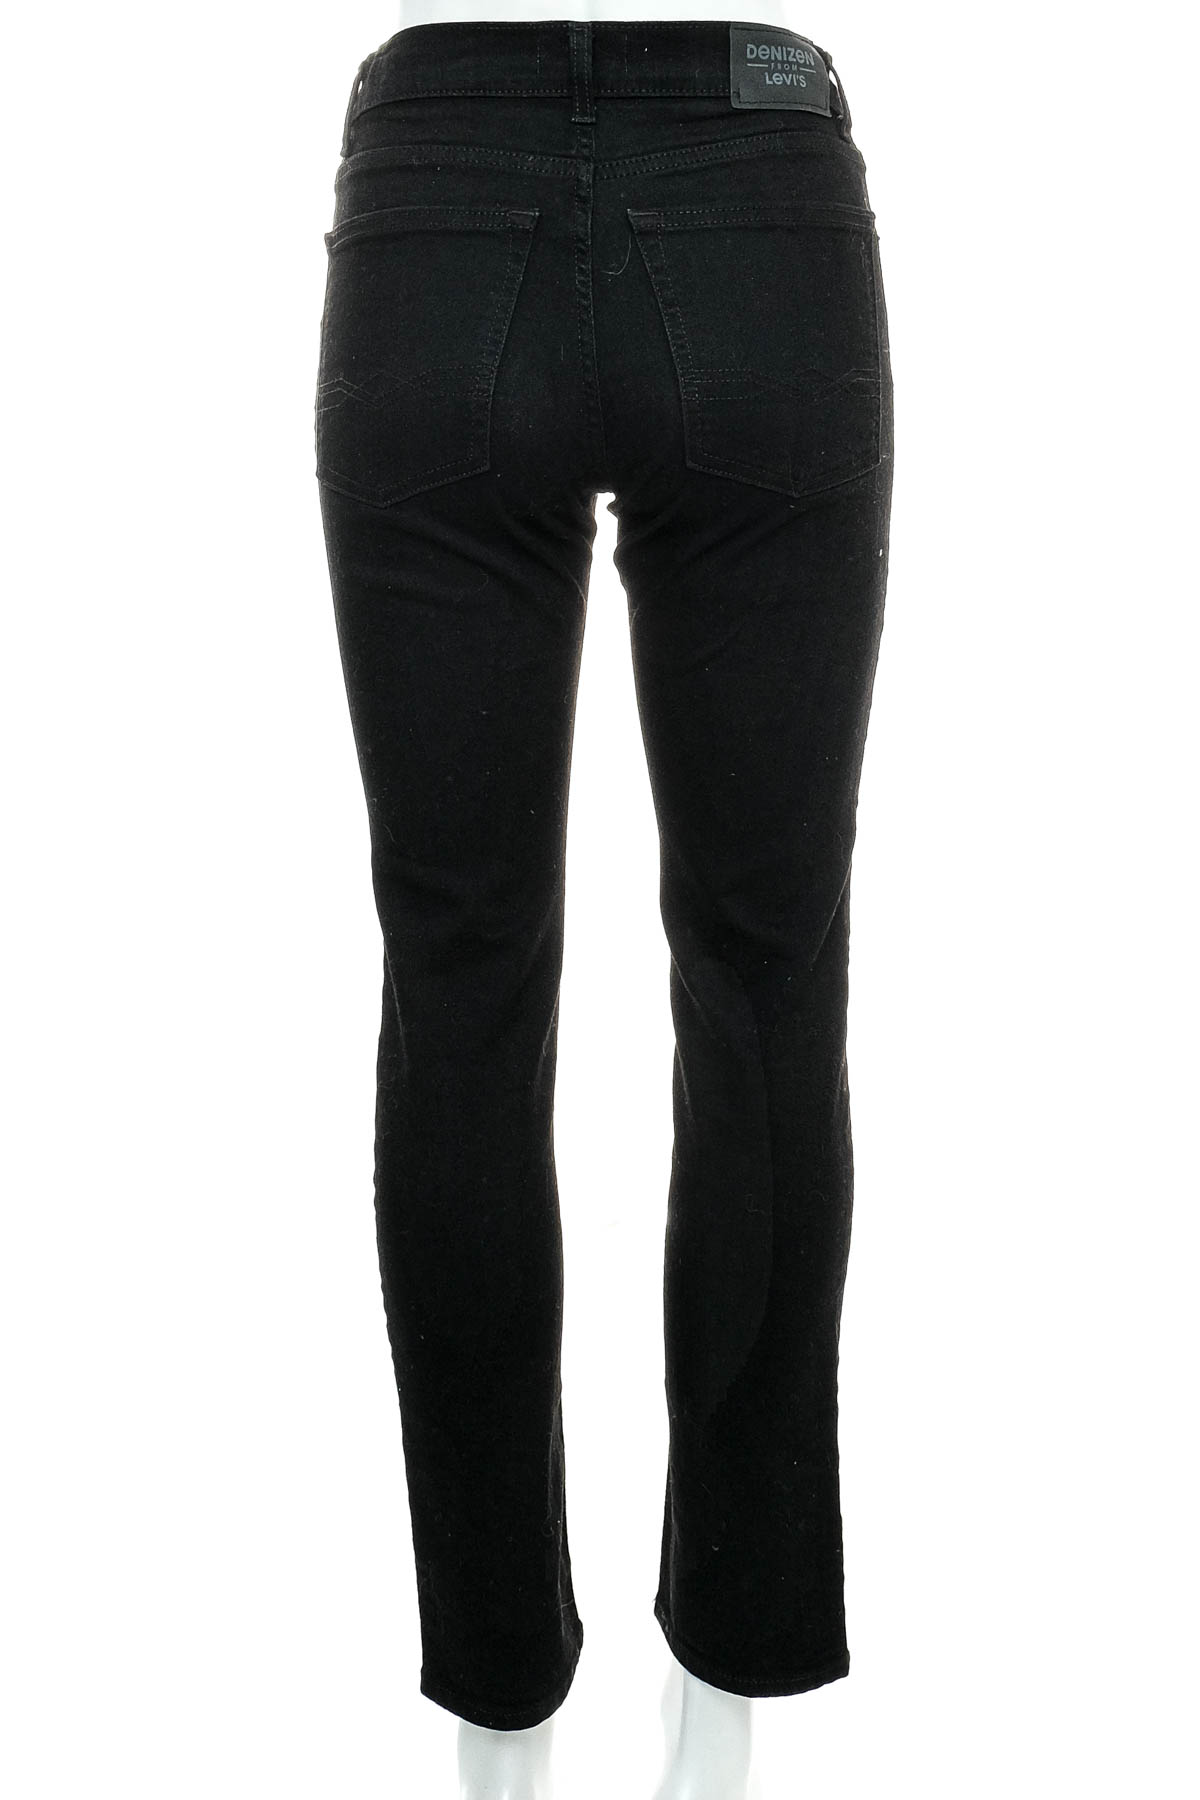 Women's jeans - LEVI'S - 1